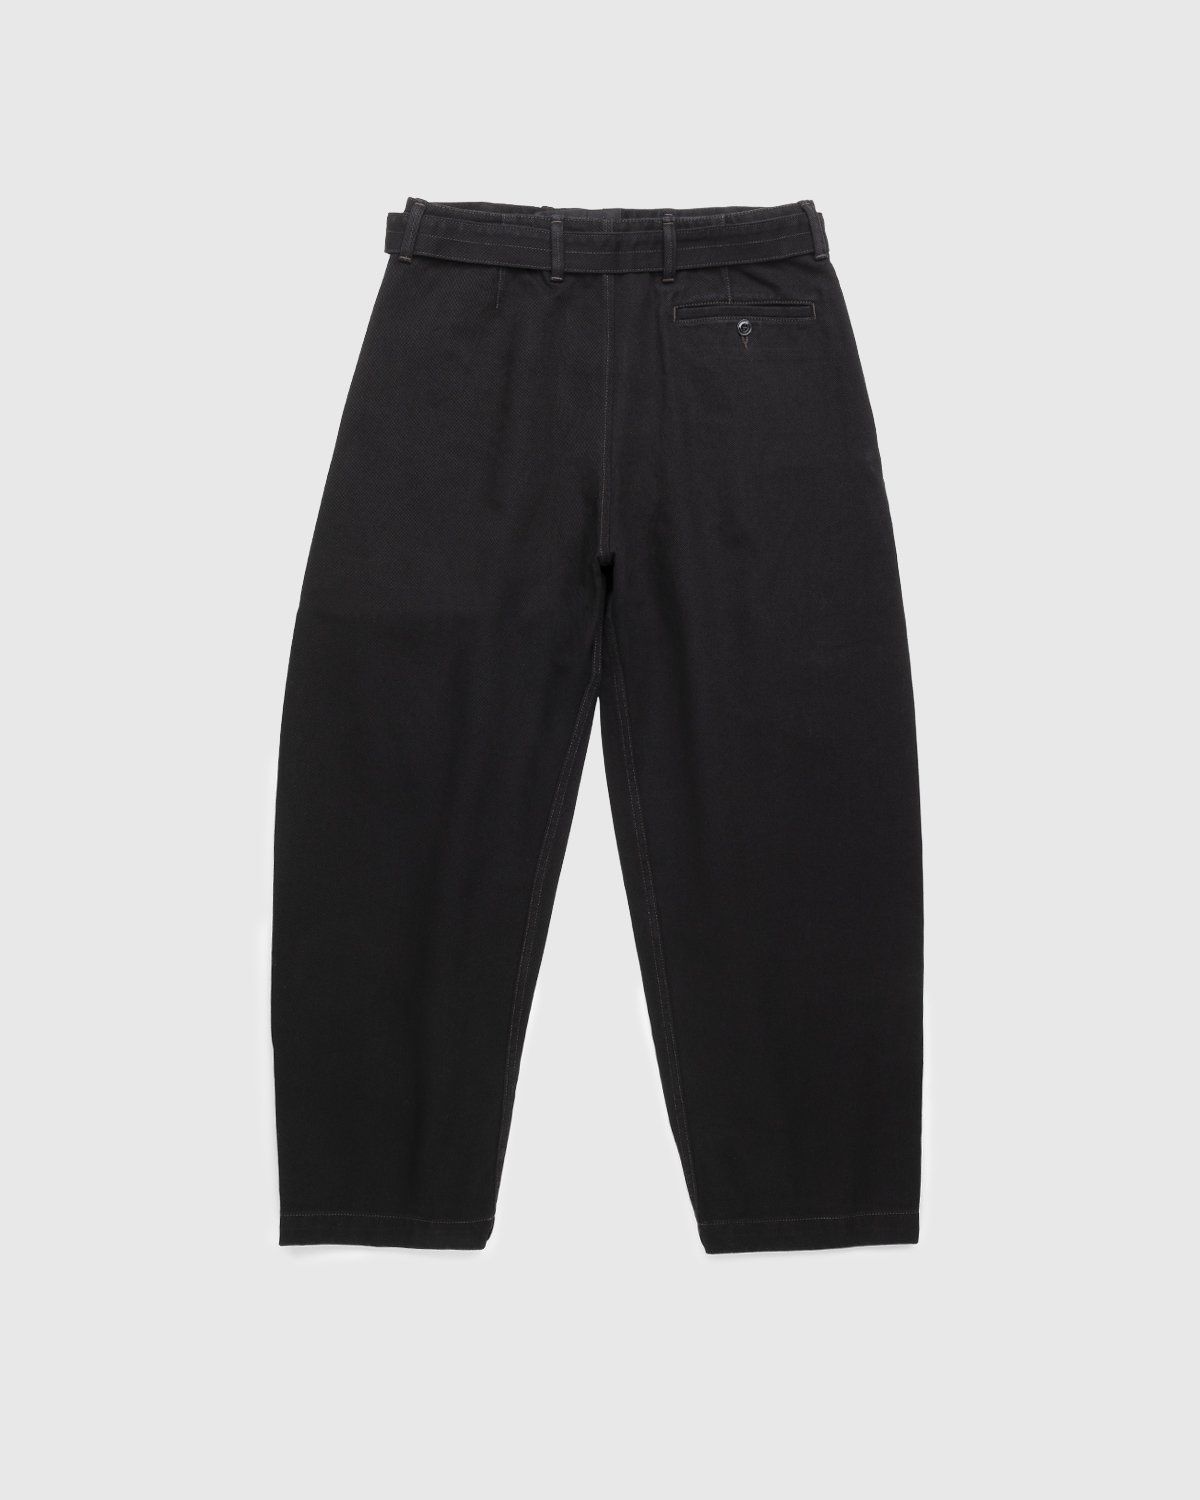 Lemaire – Rinsed Denim Twisted Pants Black - Pants - Black - Image 2